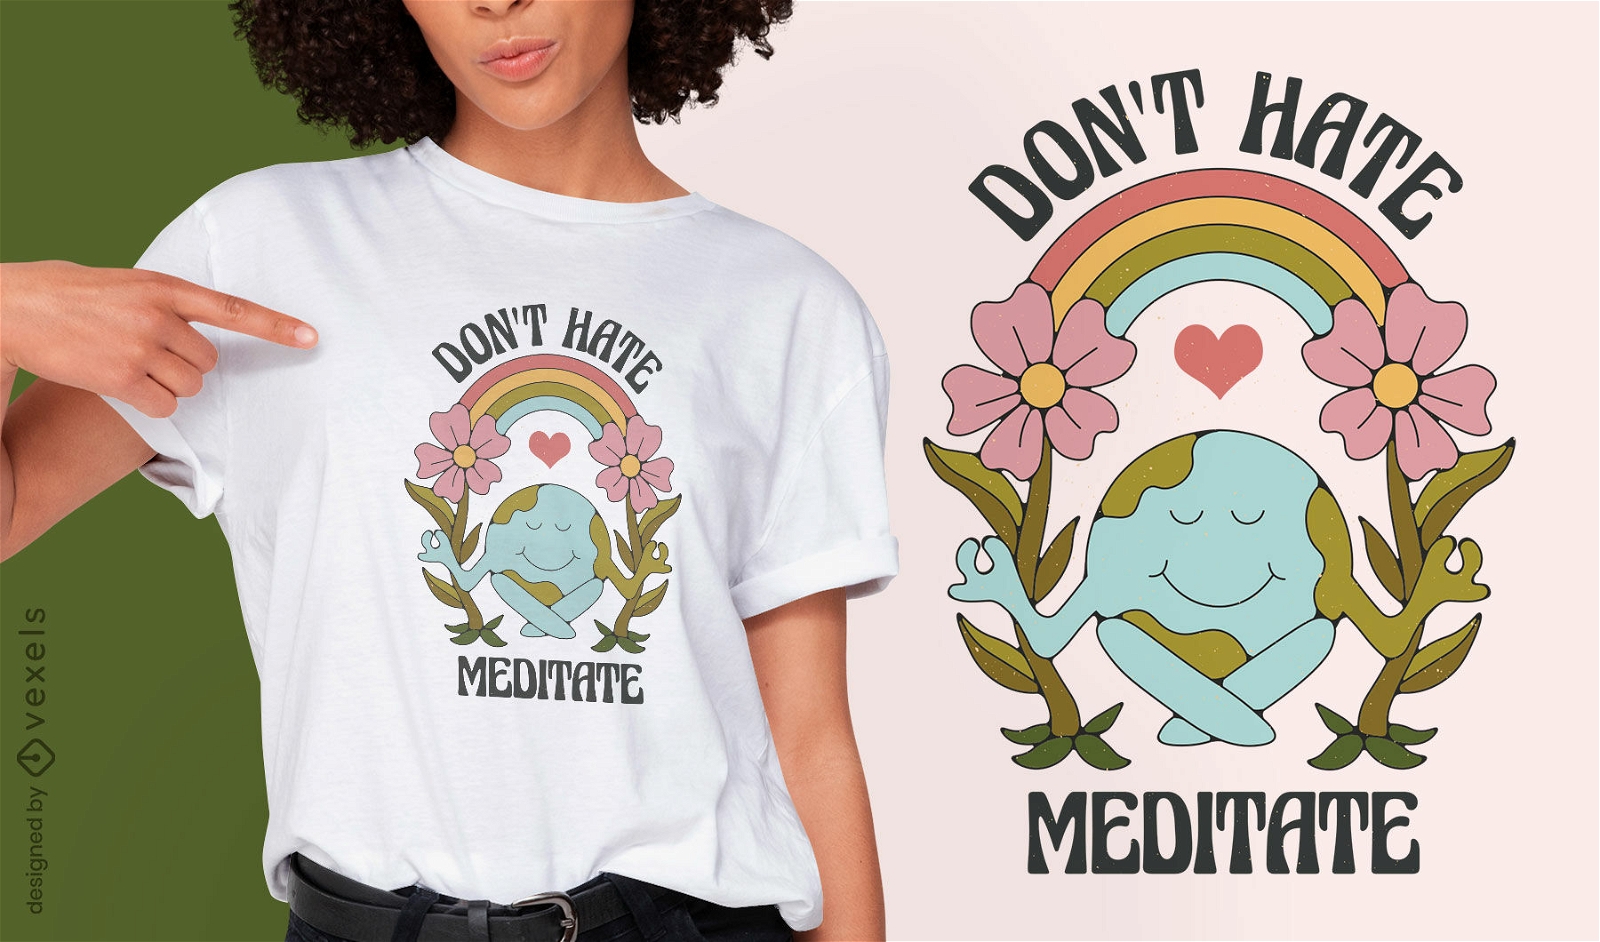 Don't hate meditate t-shirt design